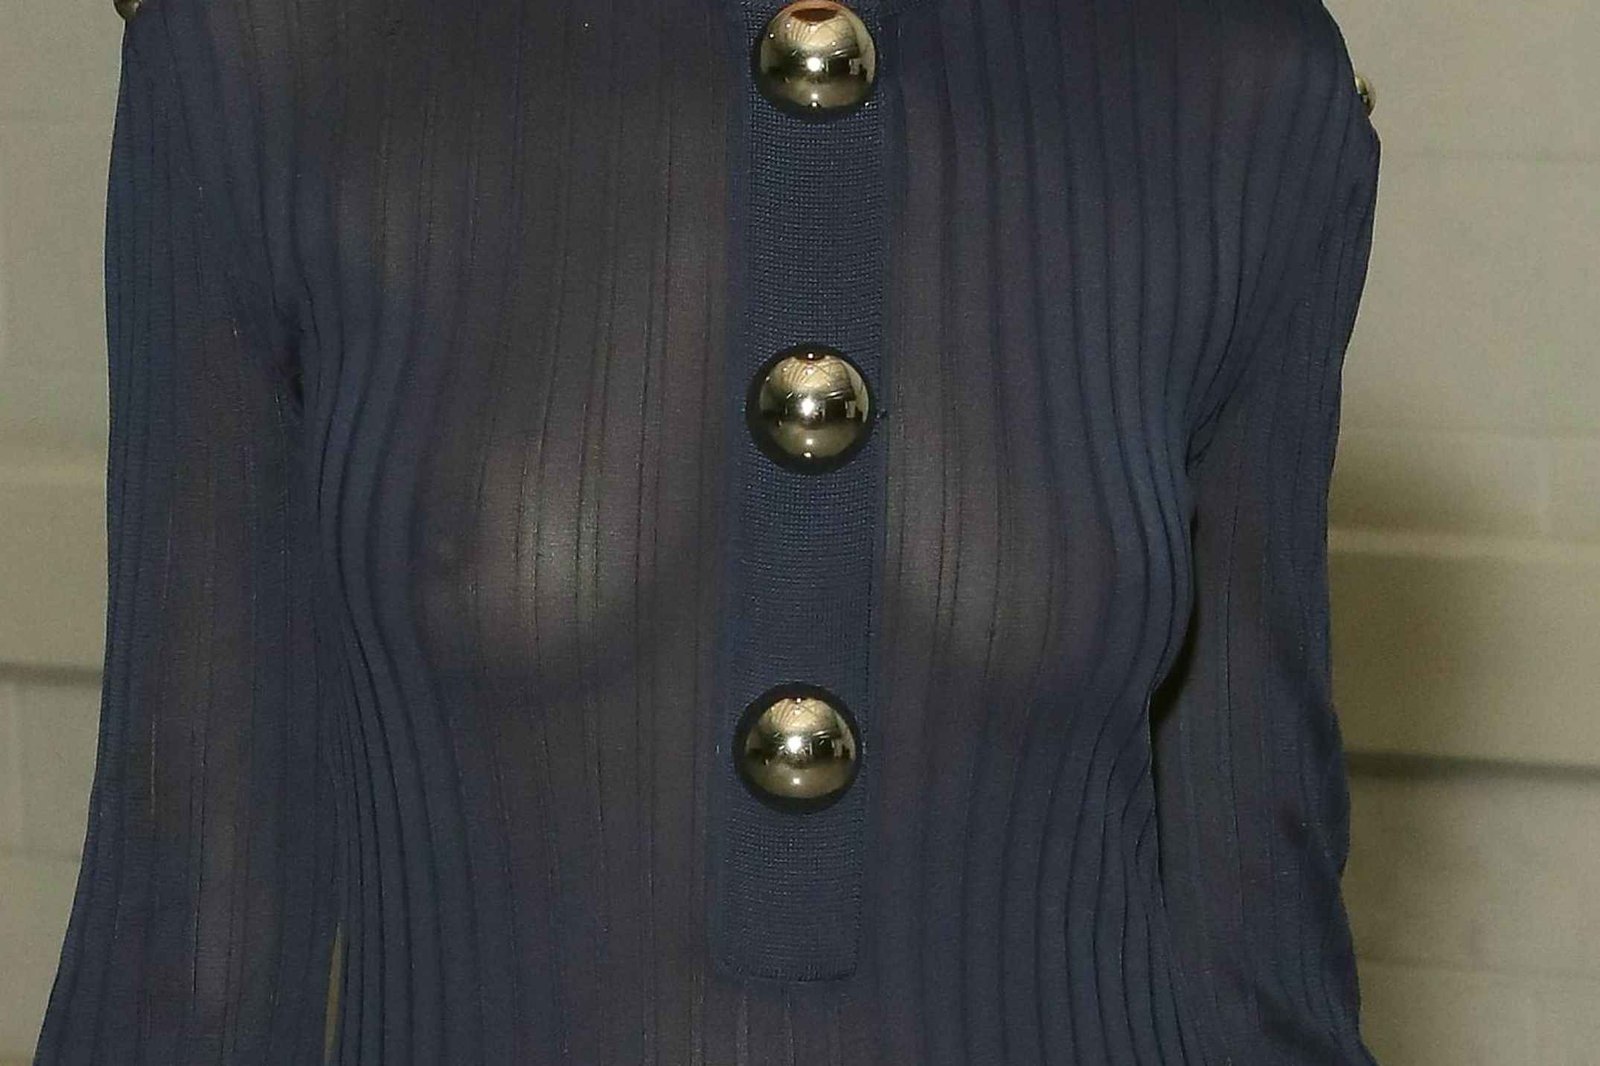 Phoebe Collings James seins nus sous sa robe transparente